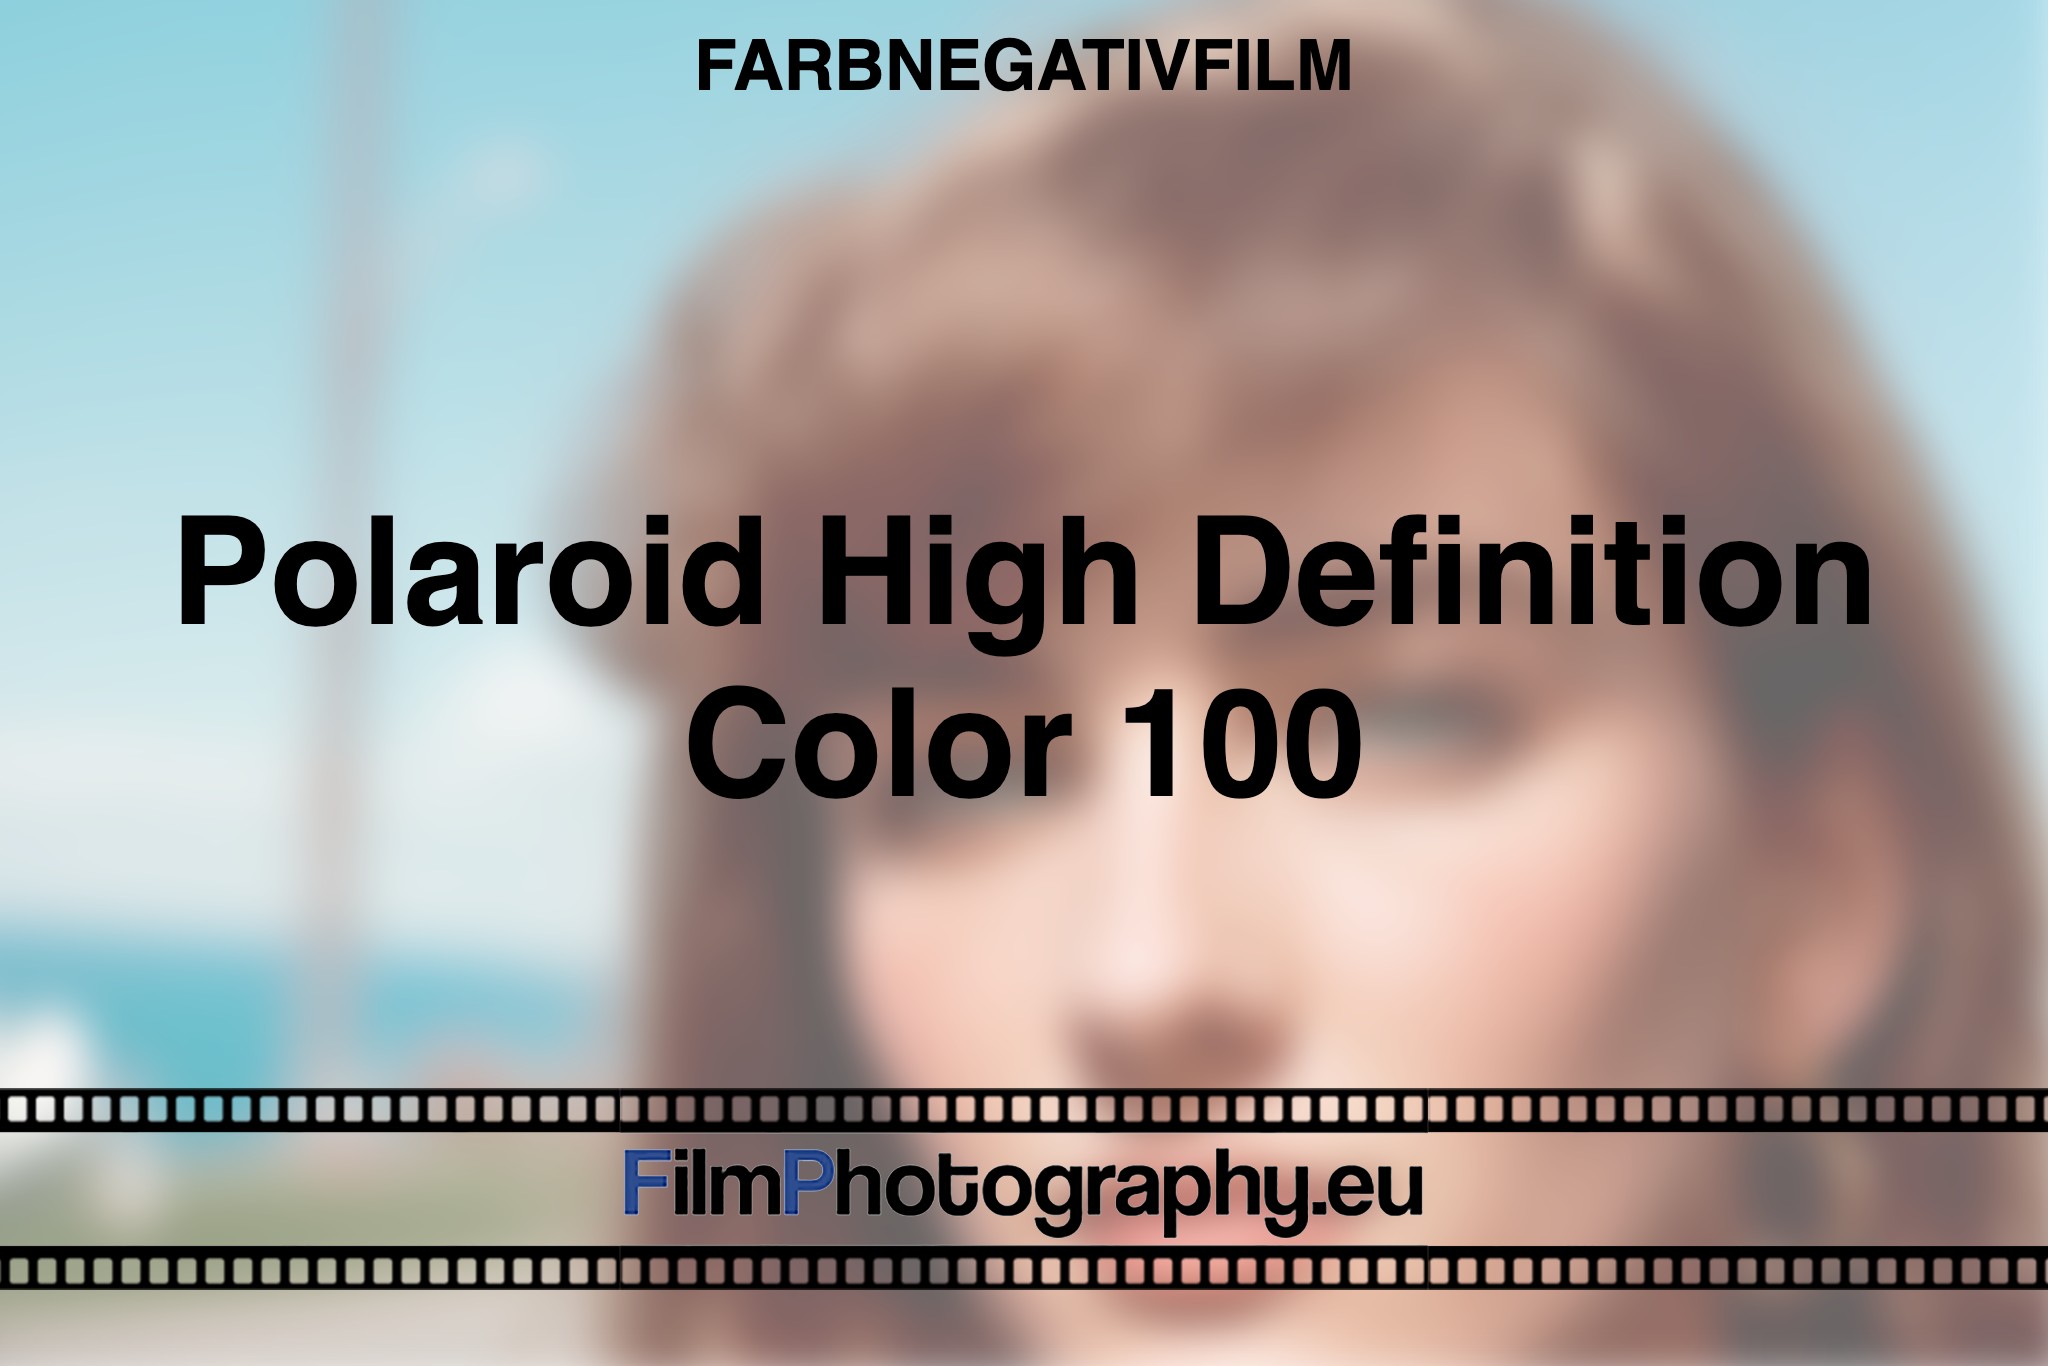 polaroid-high-definition-color-100-farbnegativfilm-bnv